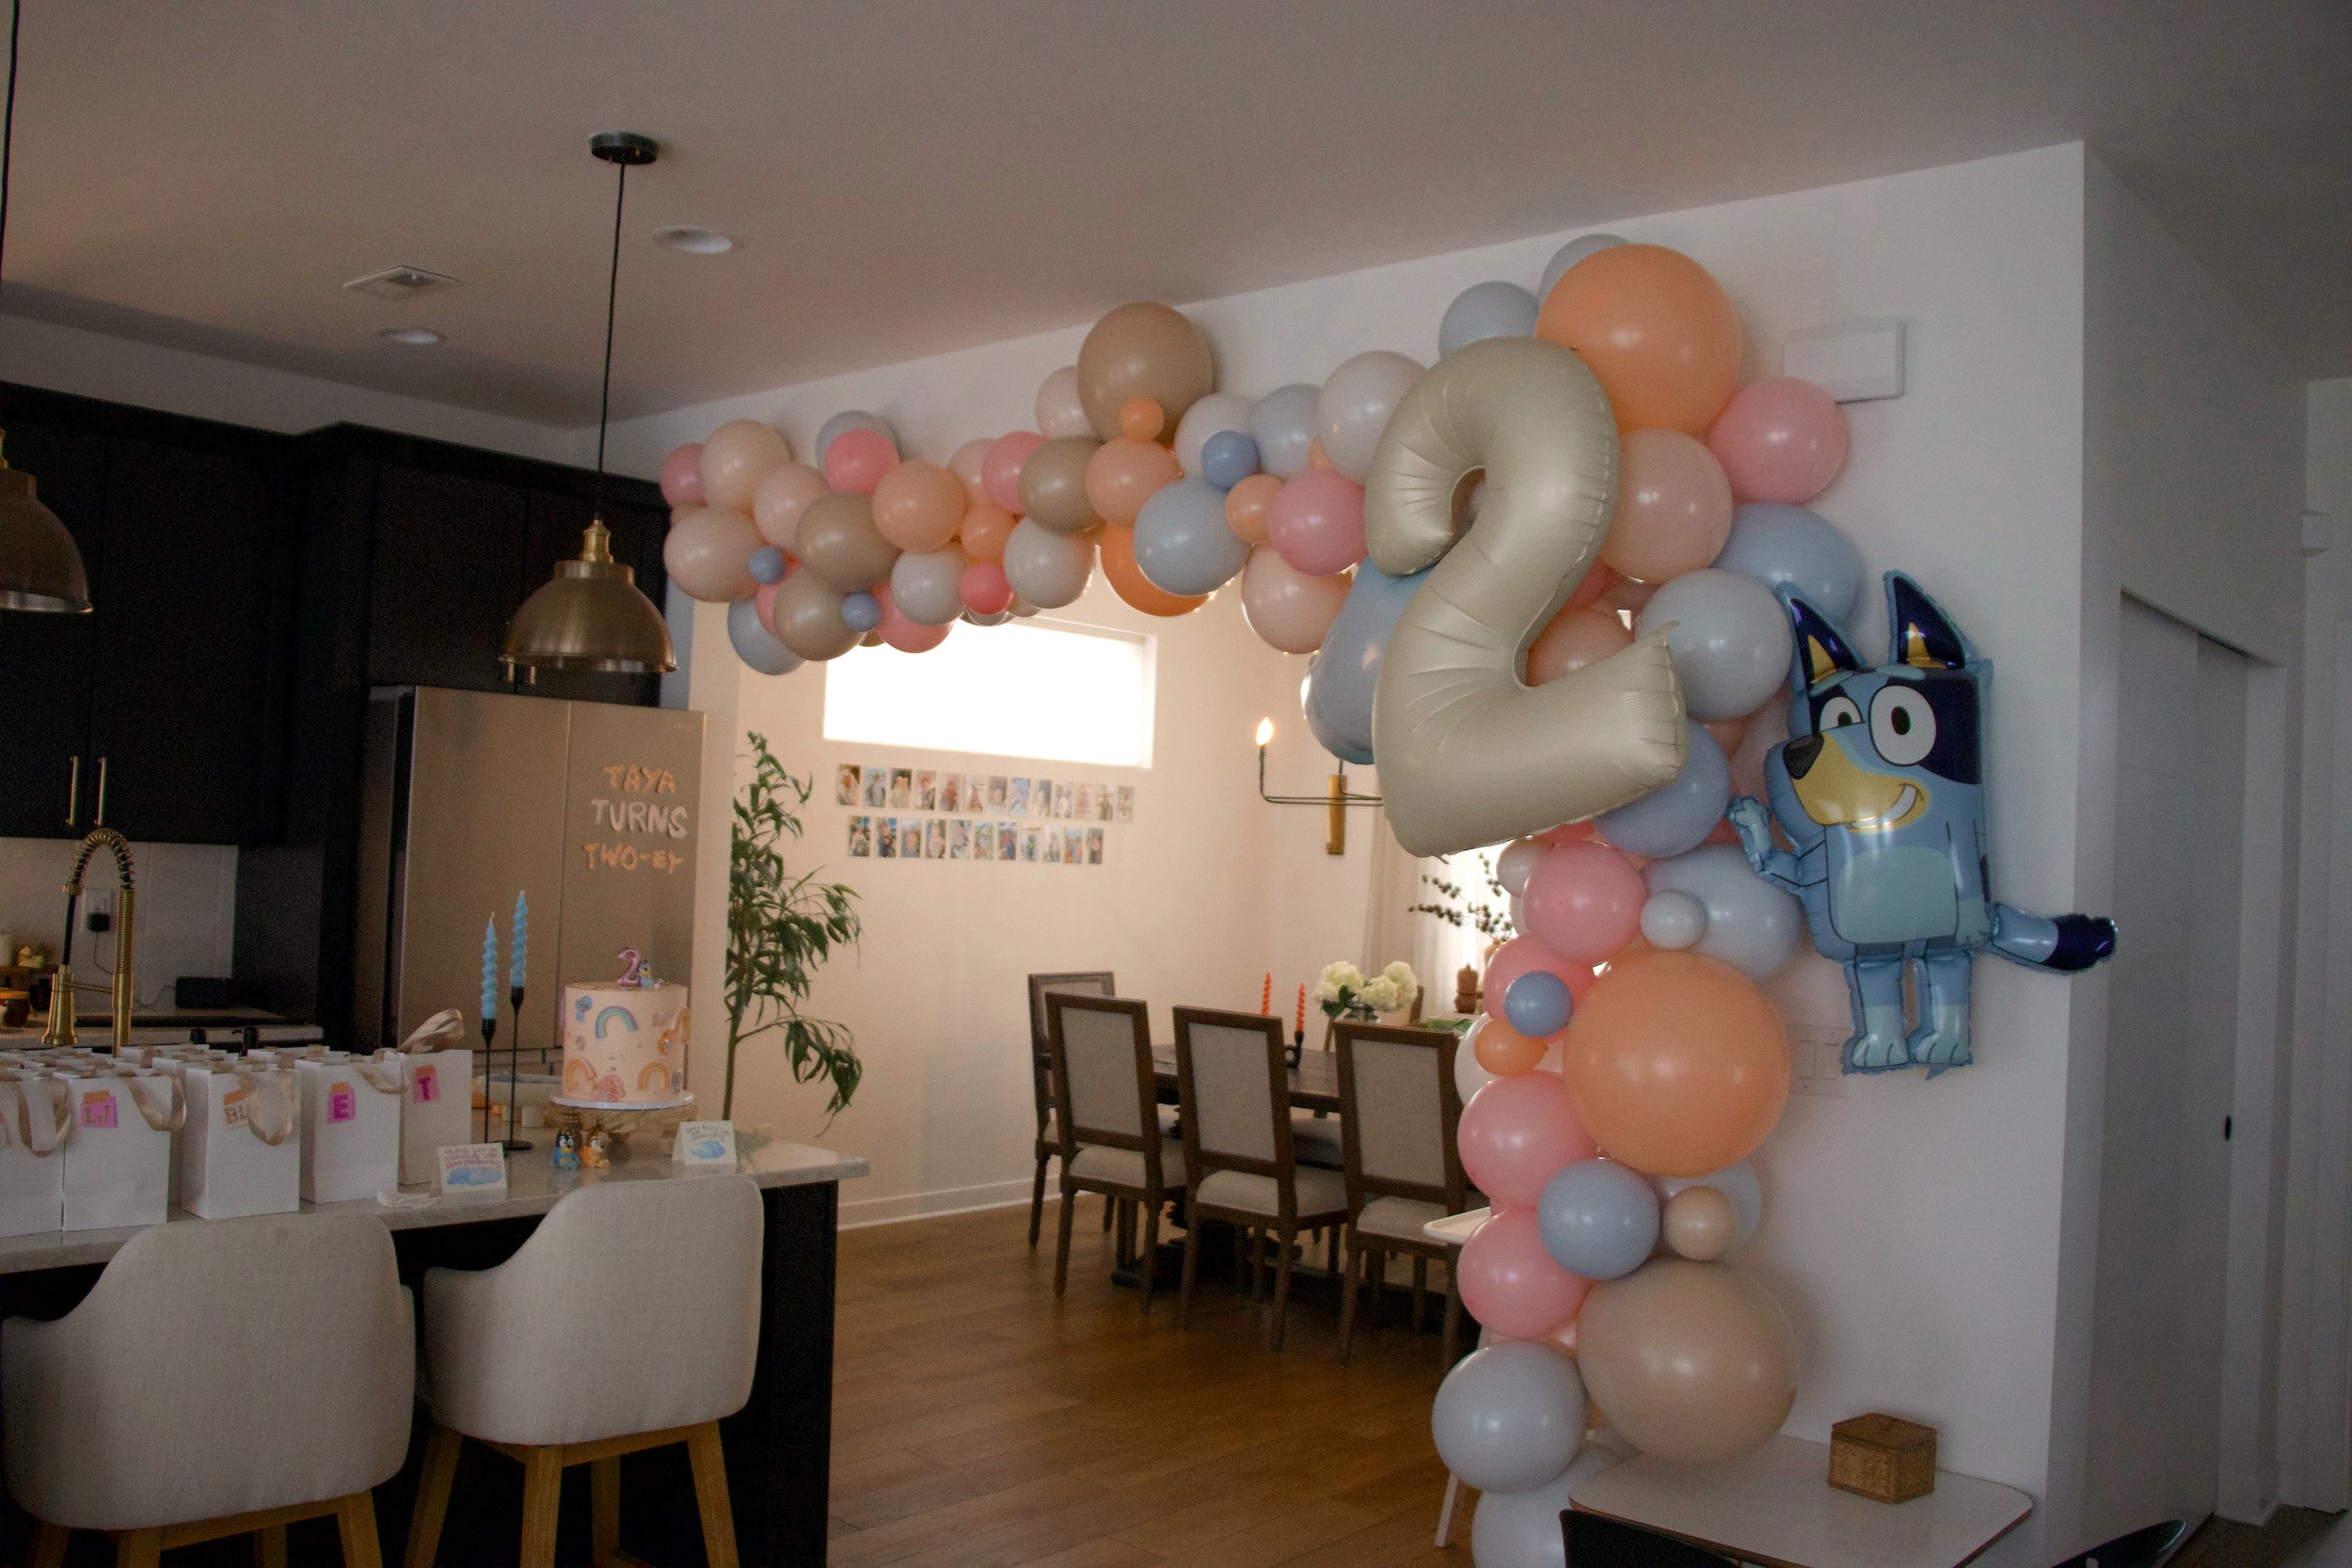 Taya Turns Two-ey (Bluey Toddler Birthday Party) - balloon arch bluey party - bresheppard.com.JPG